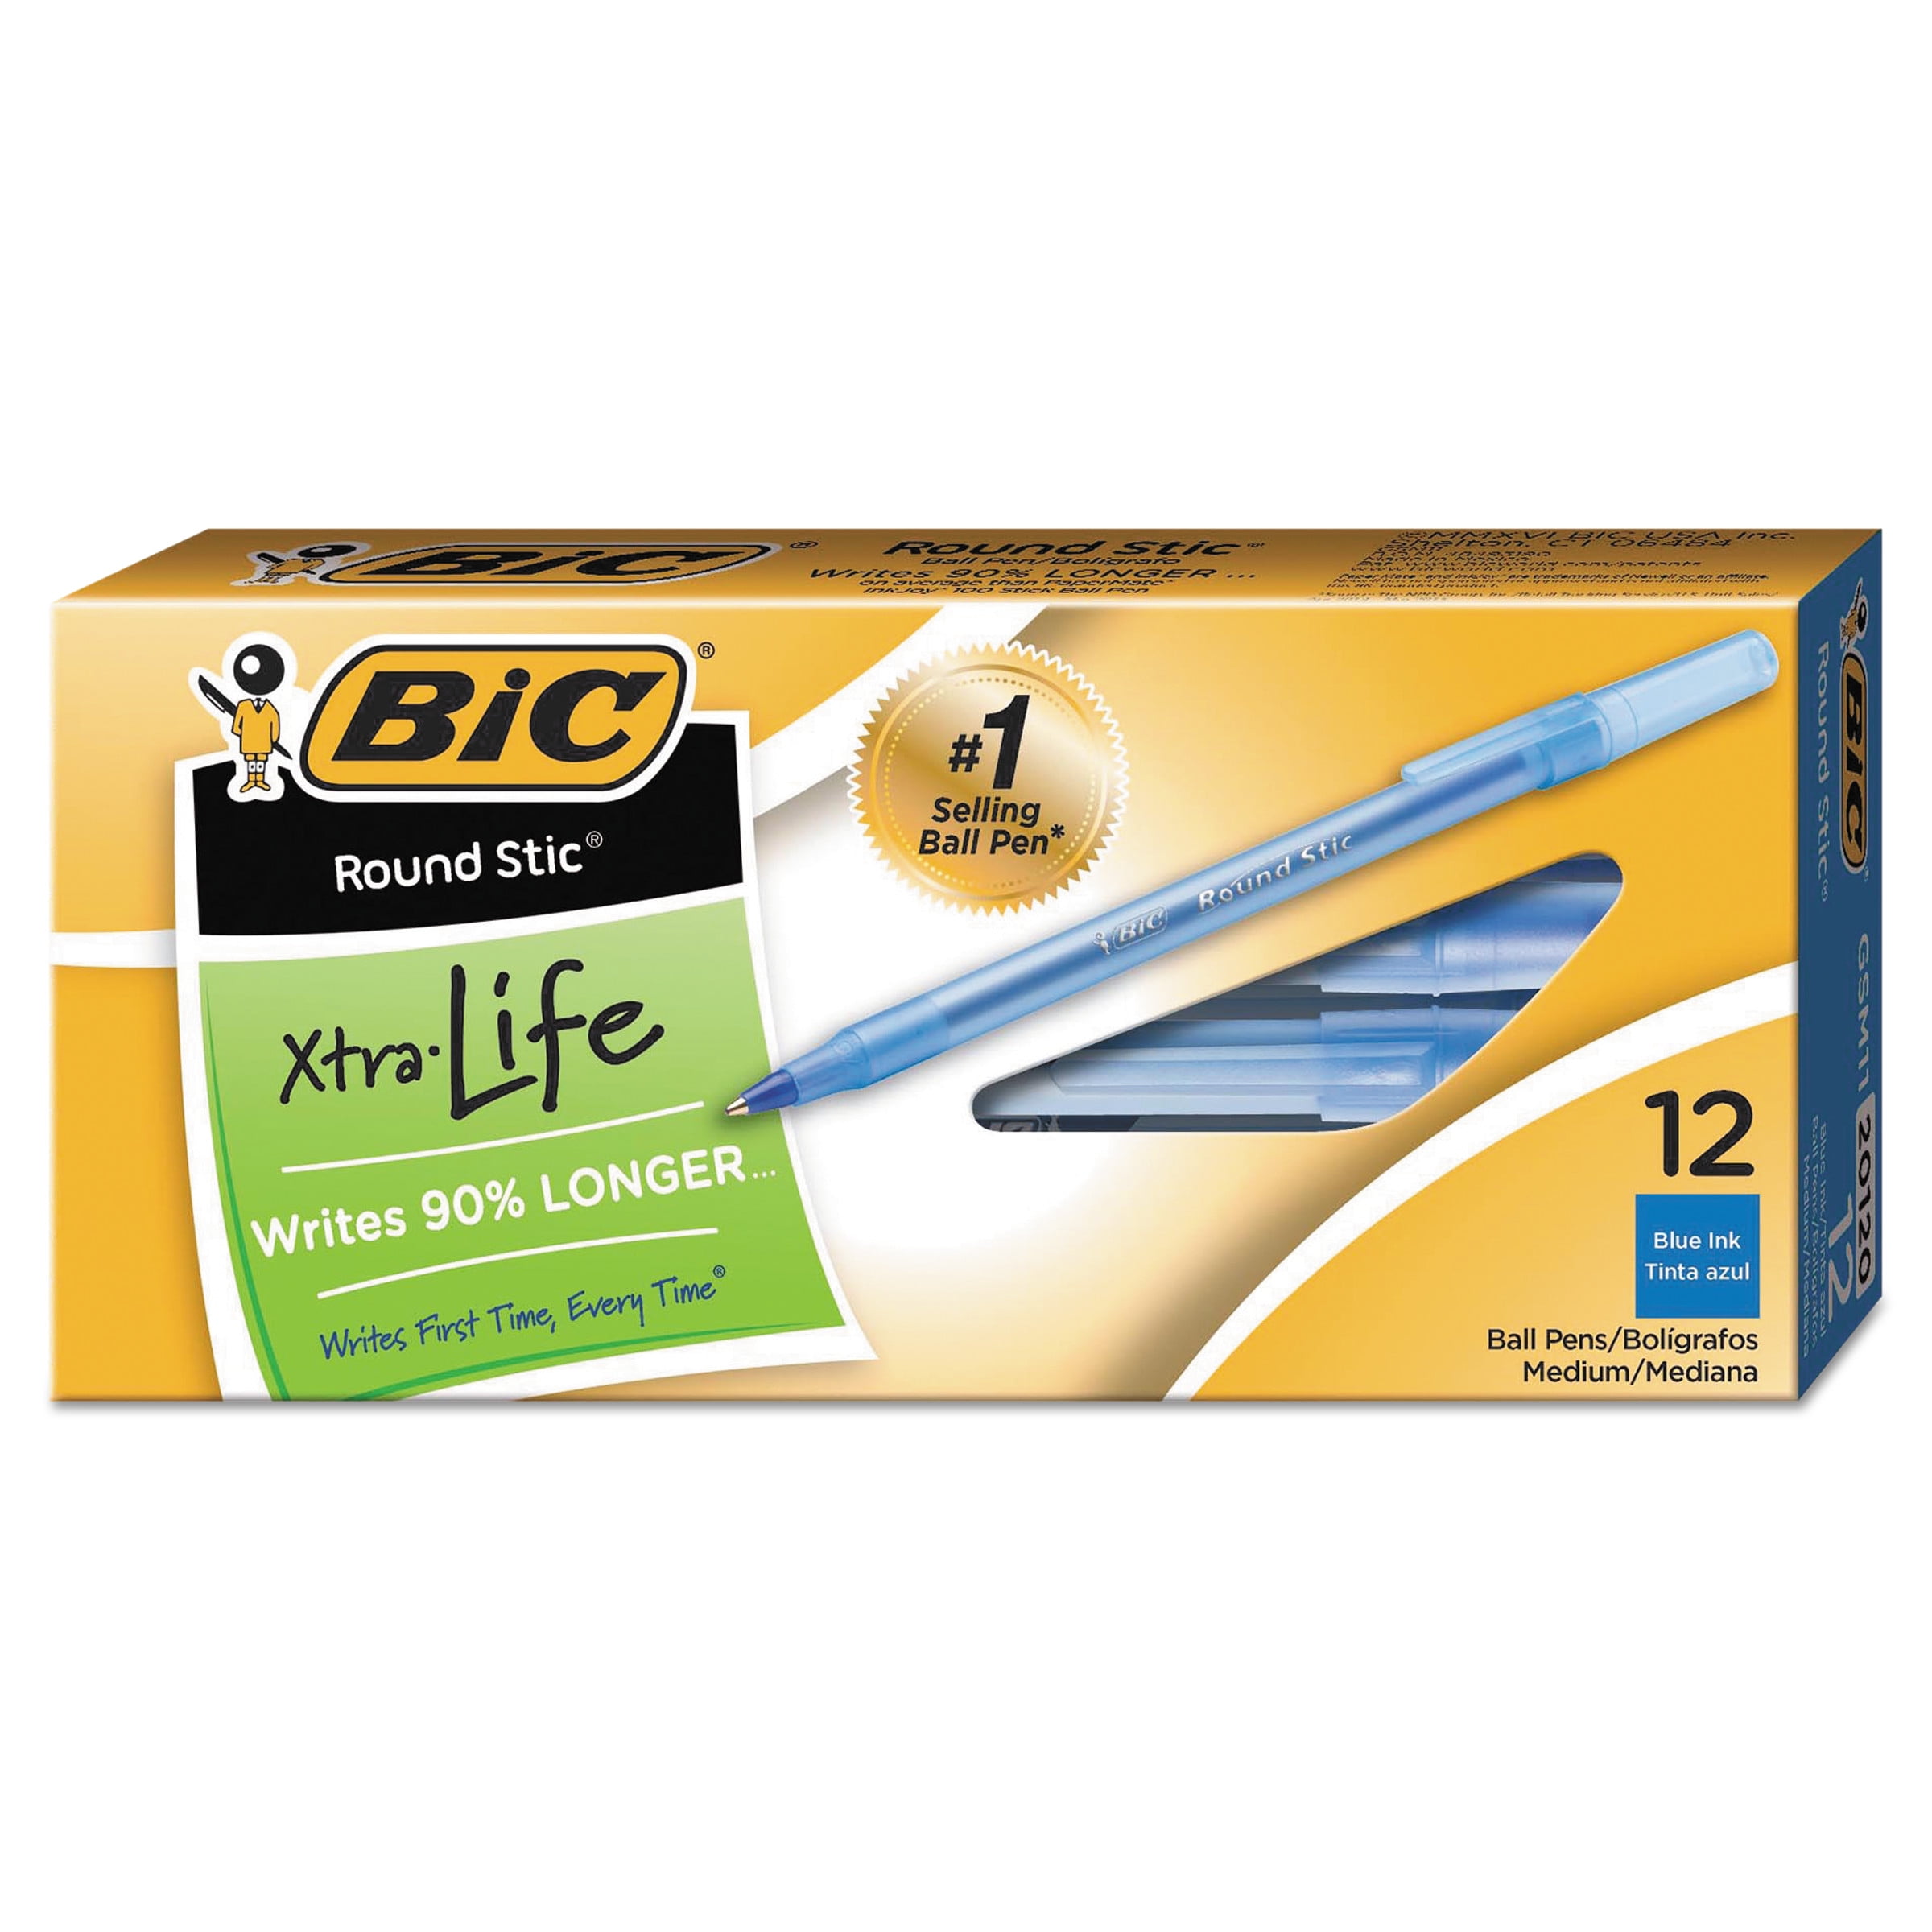 BIC Round Stic Xtra Life Ballpoint Pen 36-Count Medium Point 1 Pack Black 1.0mm 